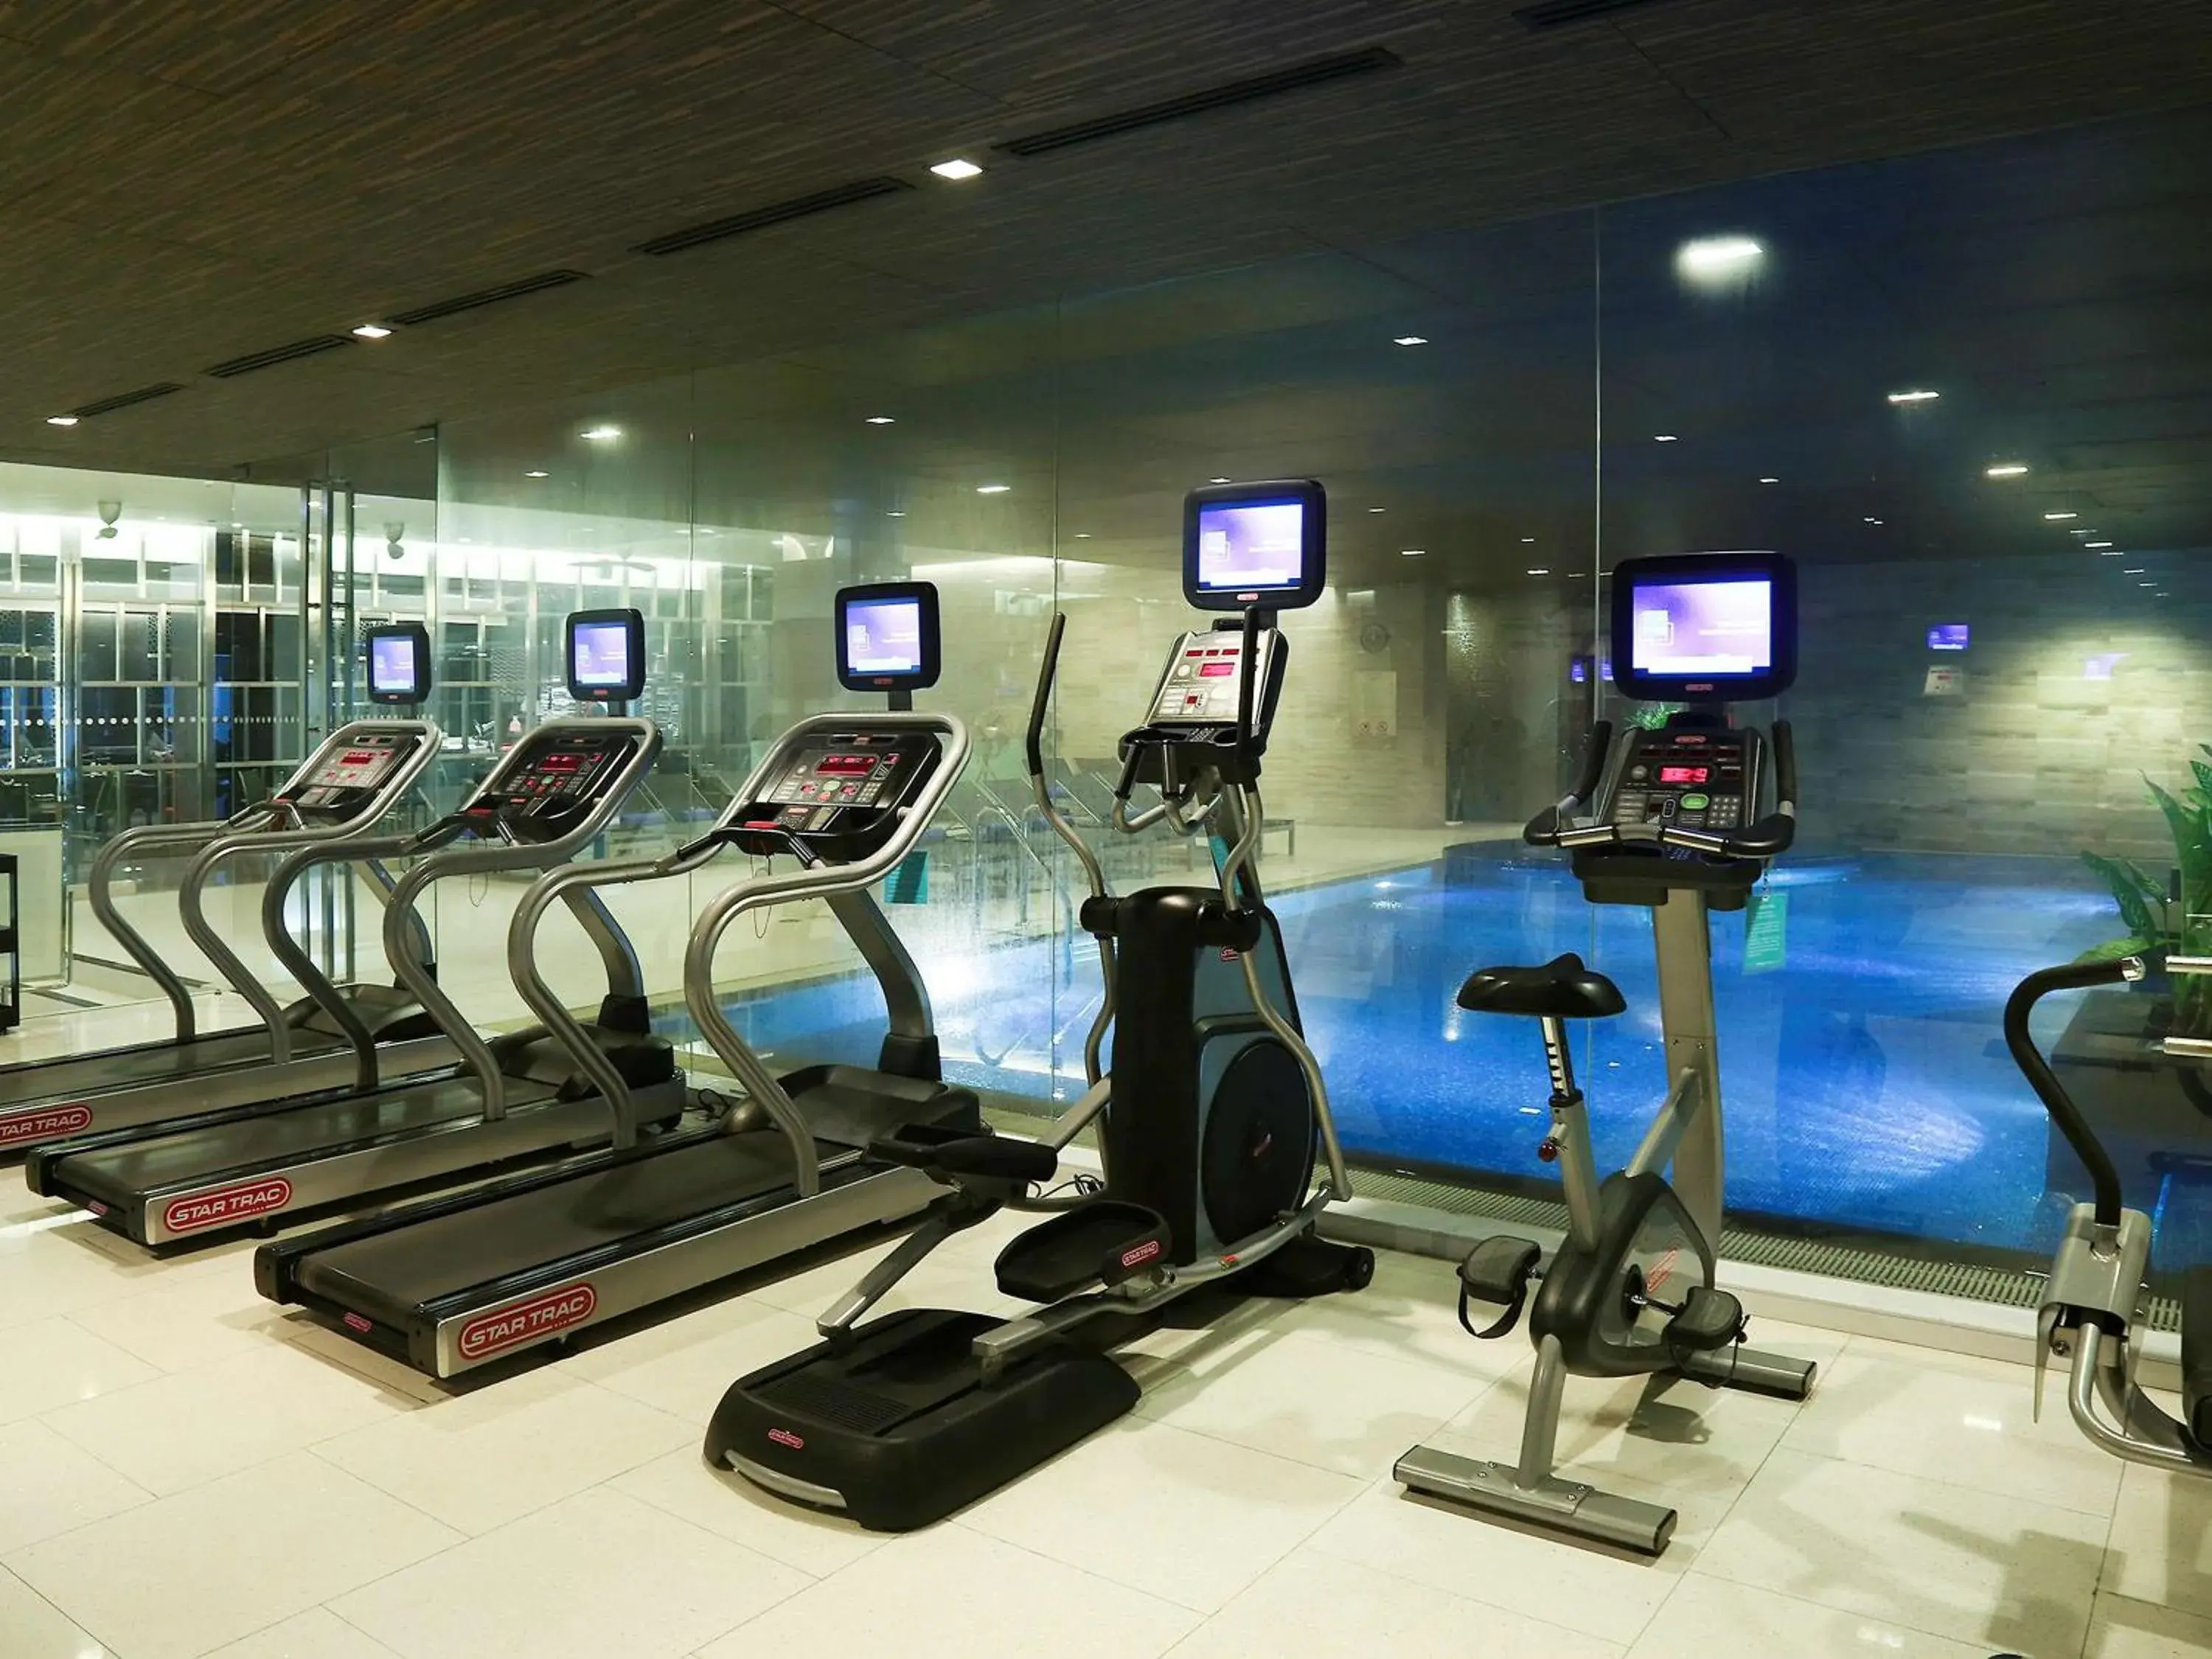 Fitness centre/facilities, Fitness Center/Facilities in Novotel Bangkok Impact Hotel